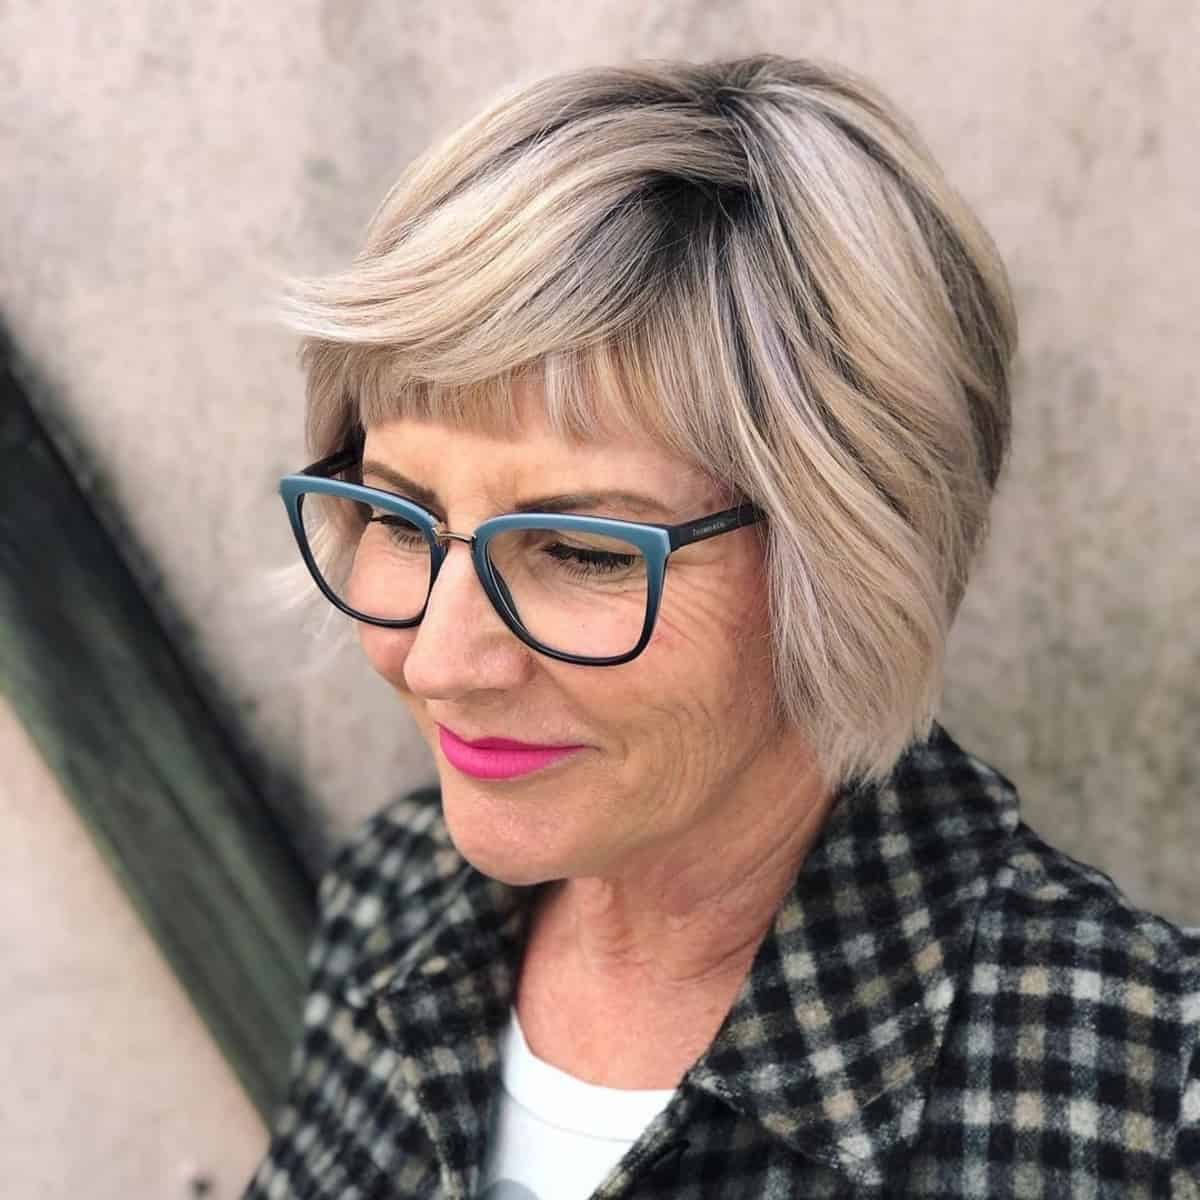 grandma inspired short bob for women aged 60 with glasses